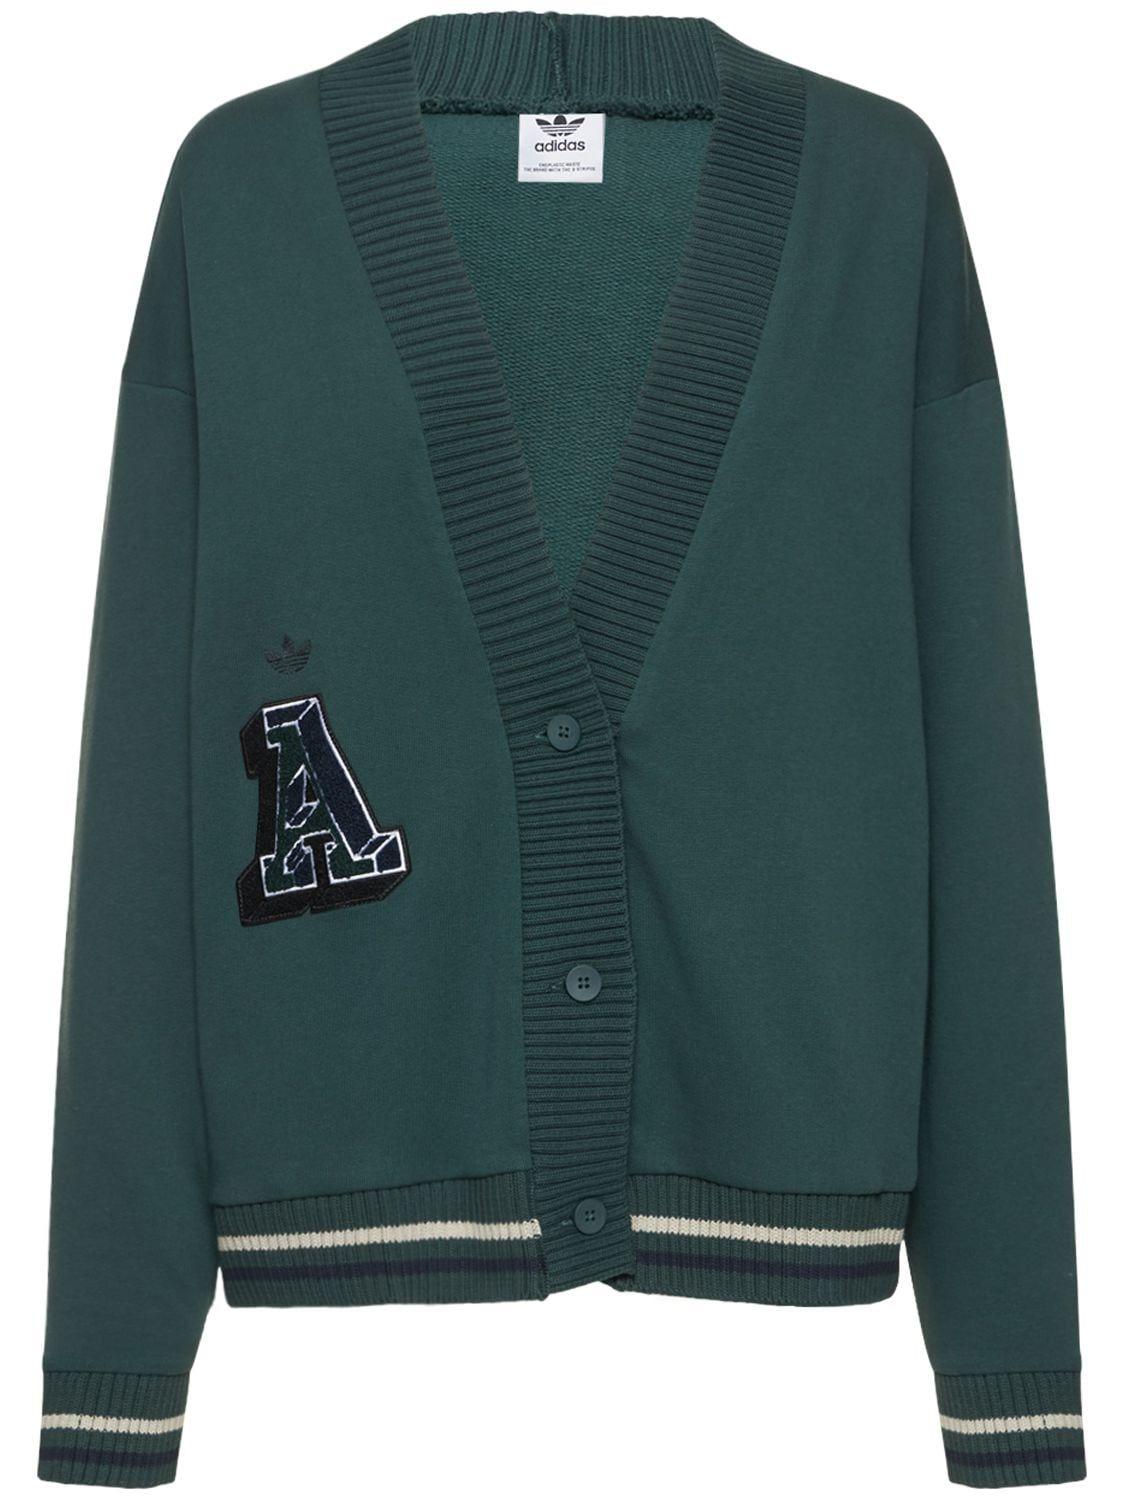 adidas Originals Cotton Knit Cardigan in Green | Lyst